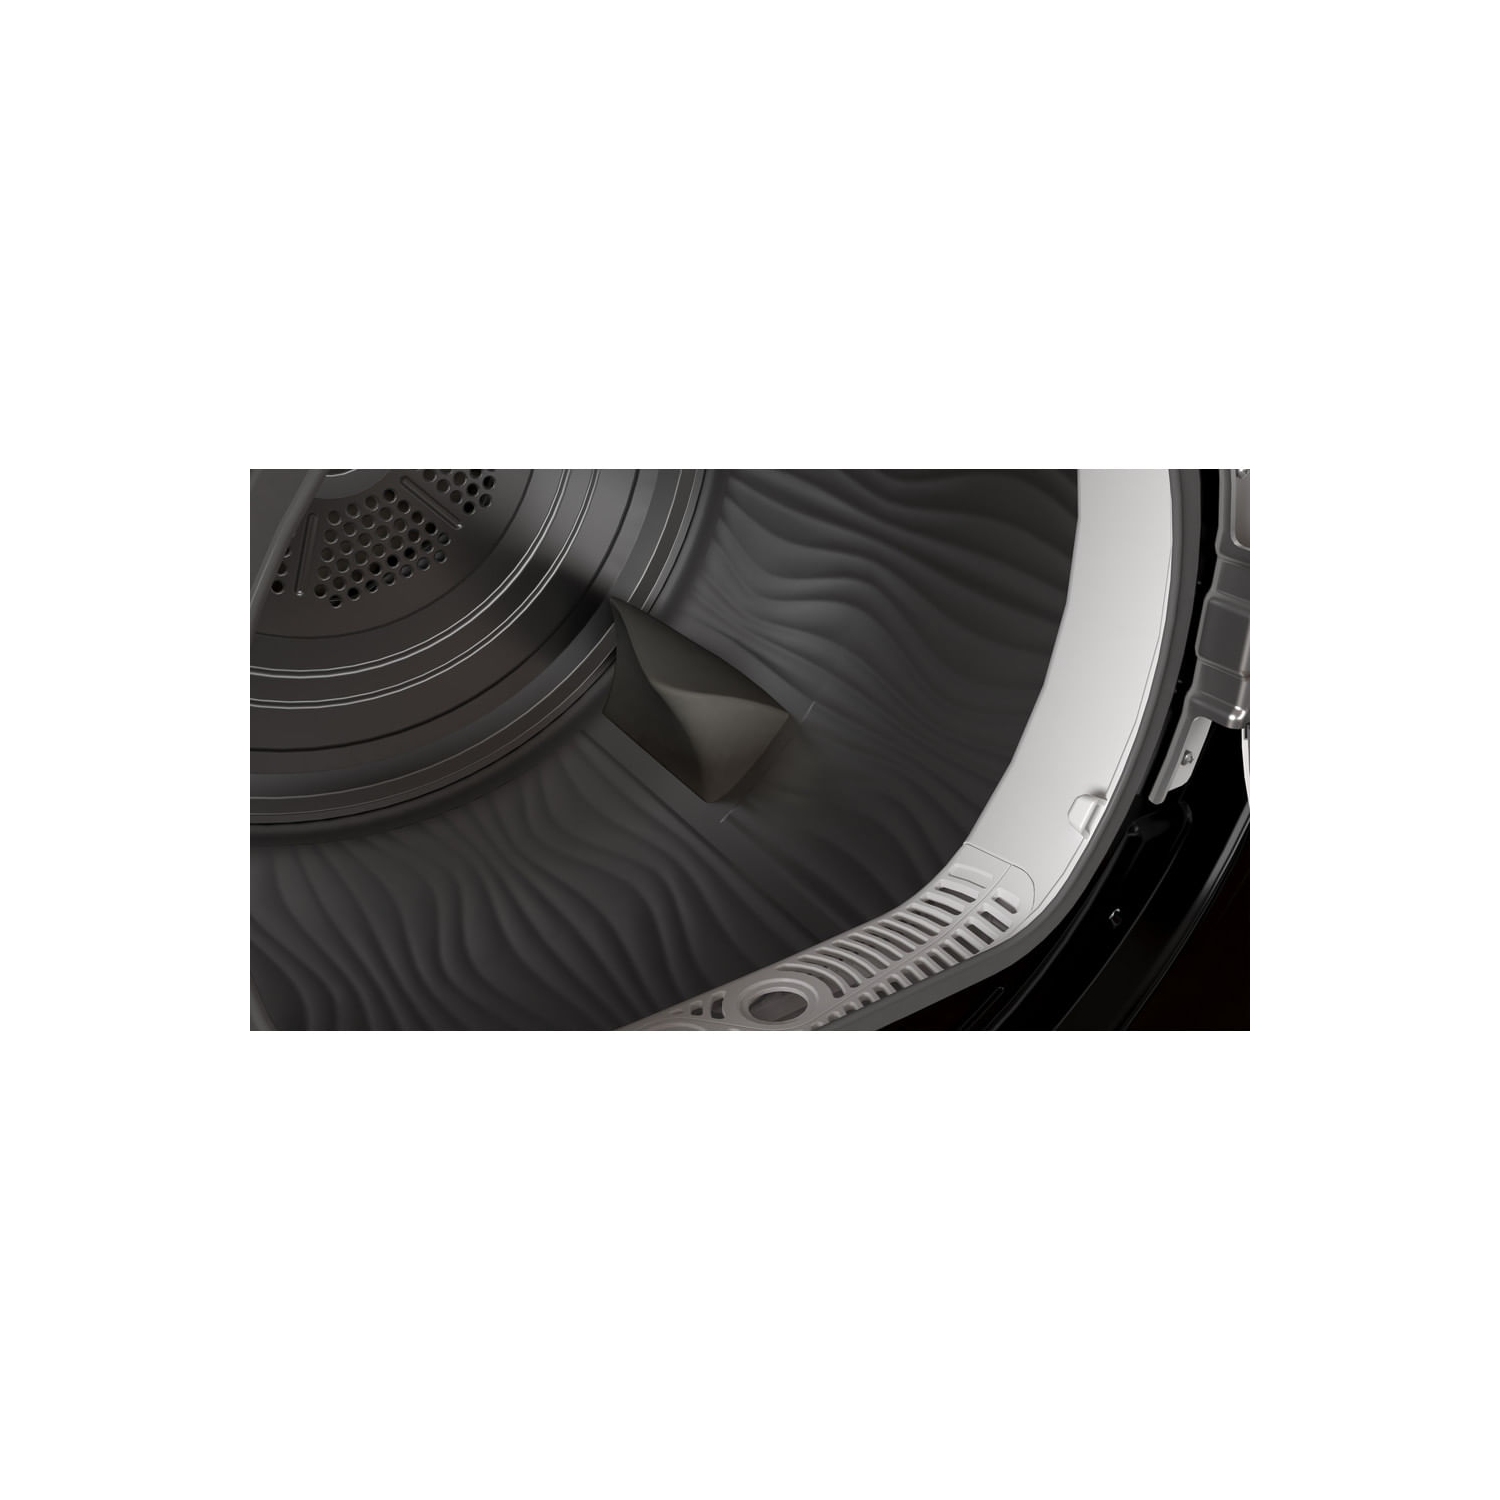 Indesit I2D81BUK 8Kg Condenser Tumble Dryer - Black - B Rated - 2